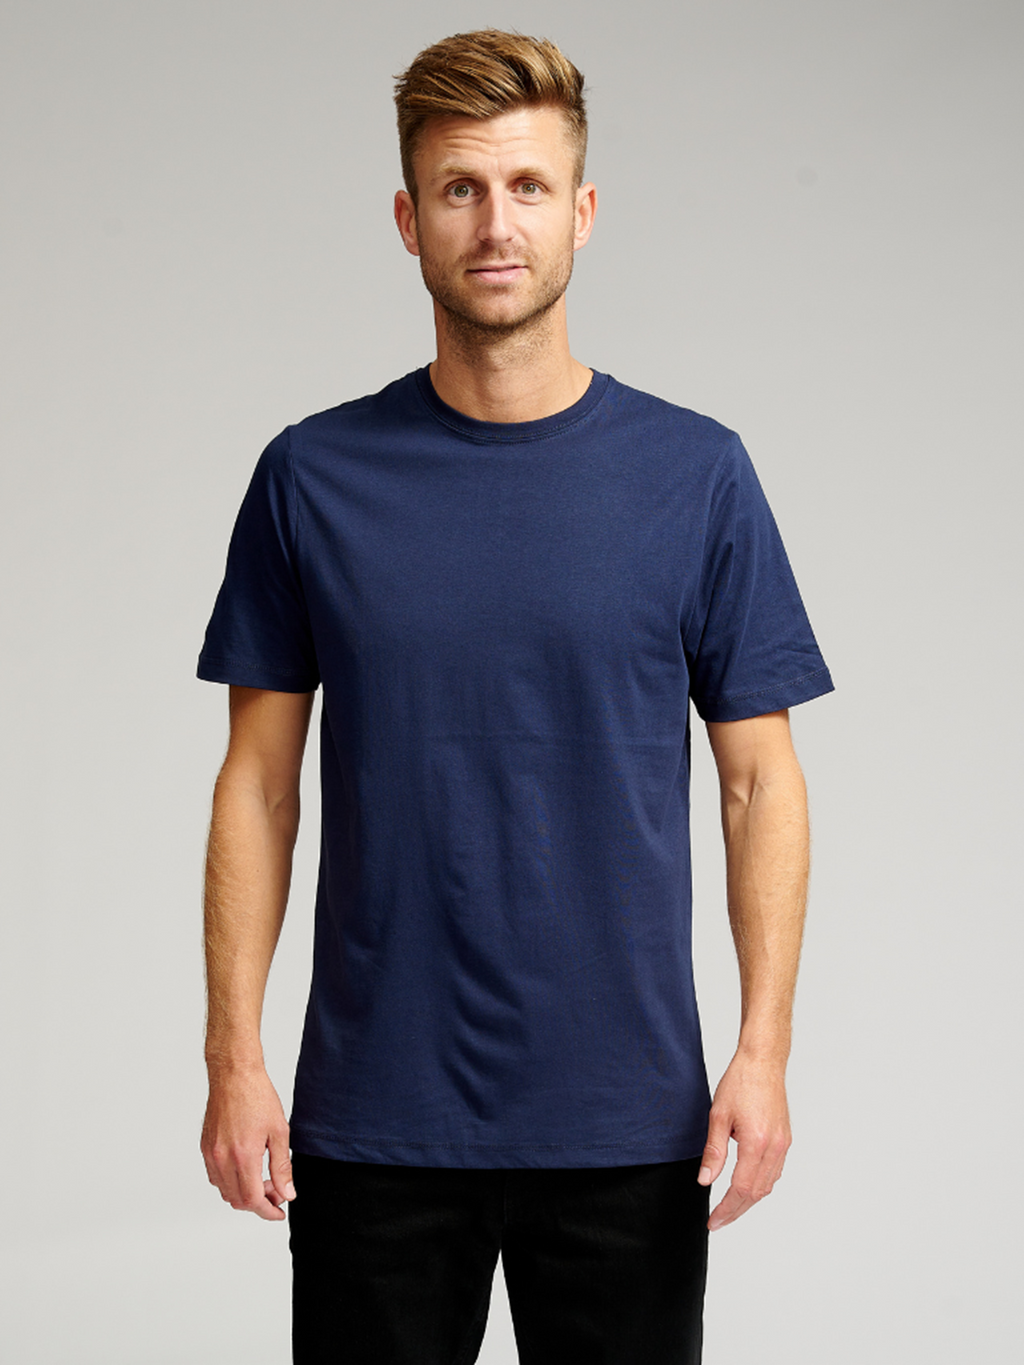 Organic Basic T-shirts - Package Deal (6 pcs.)